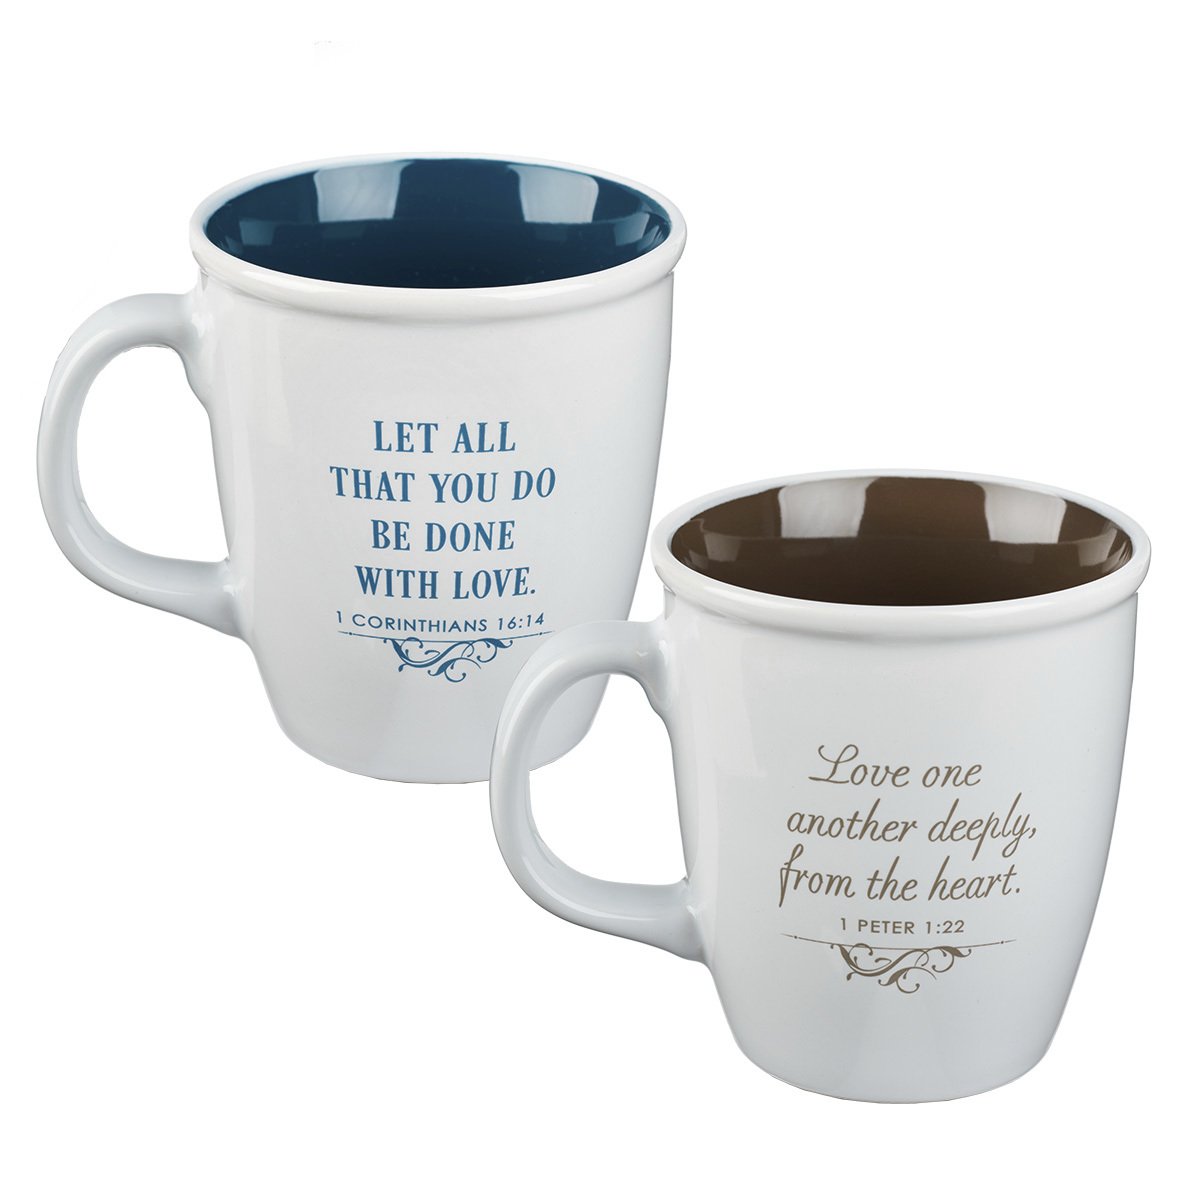 Mr. & Mrs. Tea Cup Set